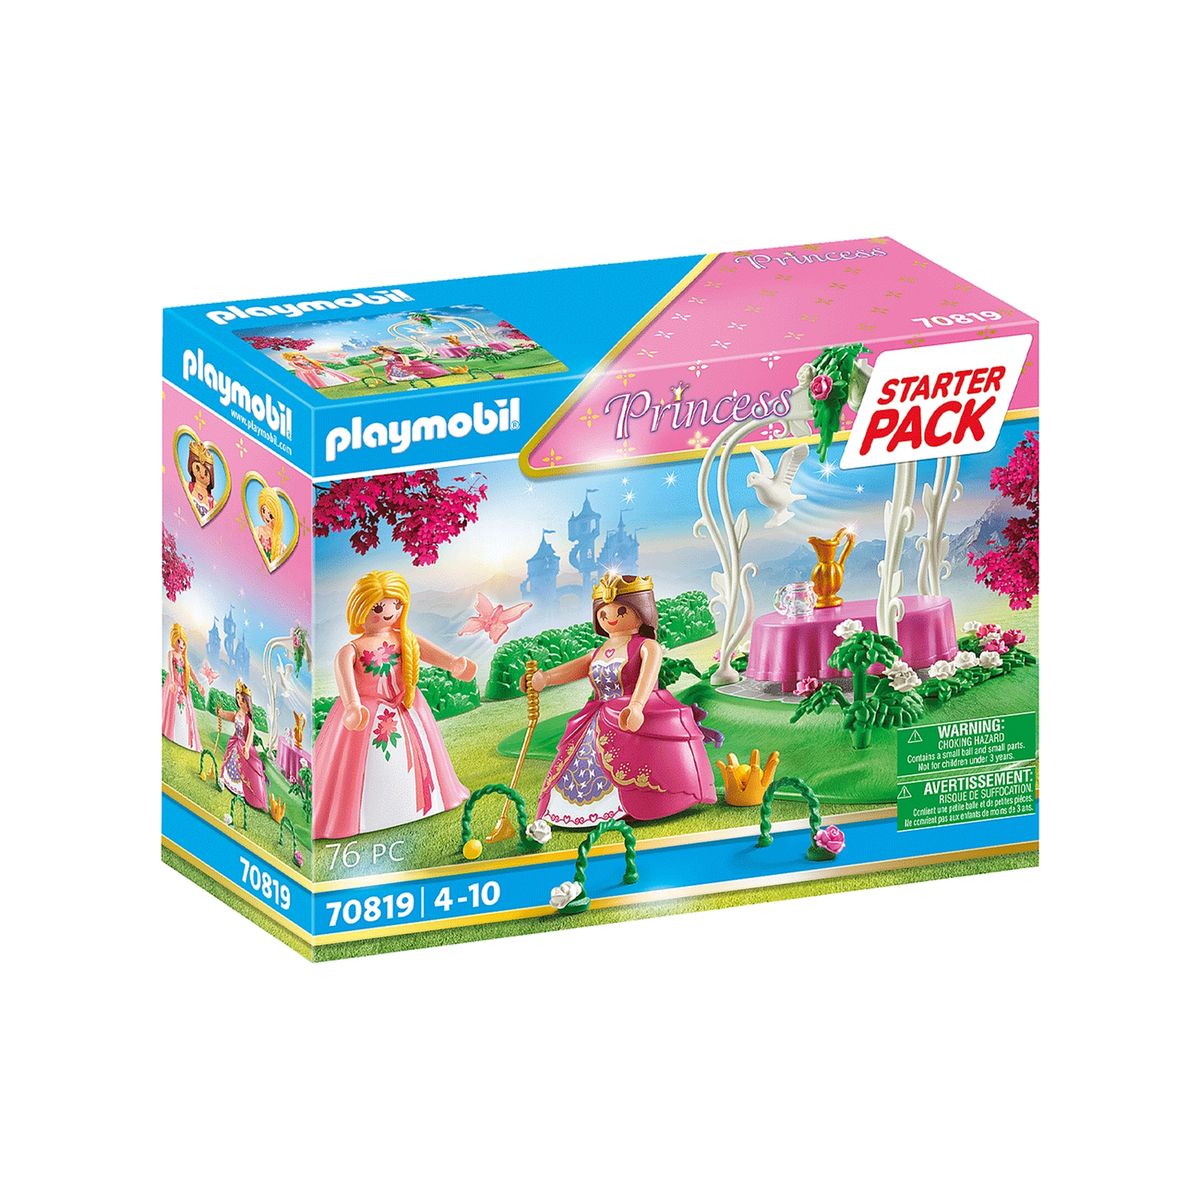 Playmobil 70107 Princess : Valisette Princesses avec licorne - N/A